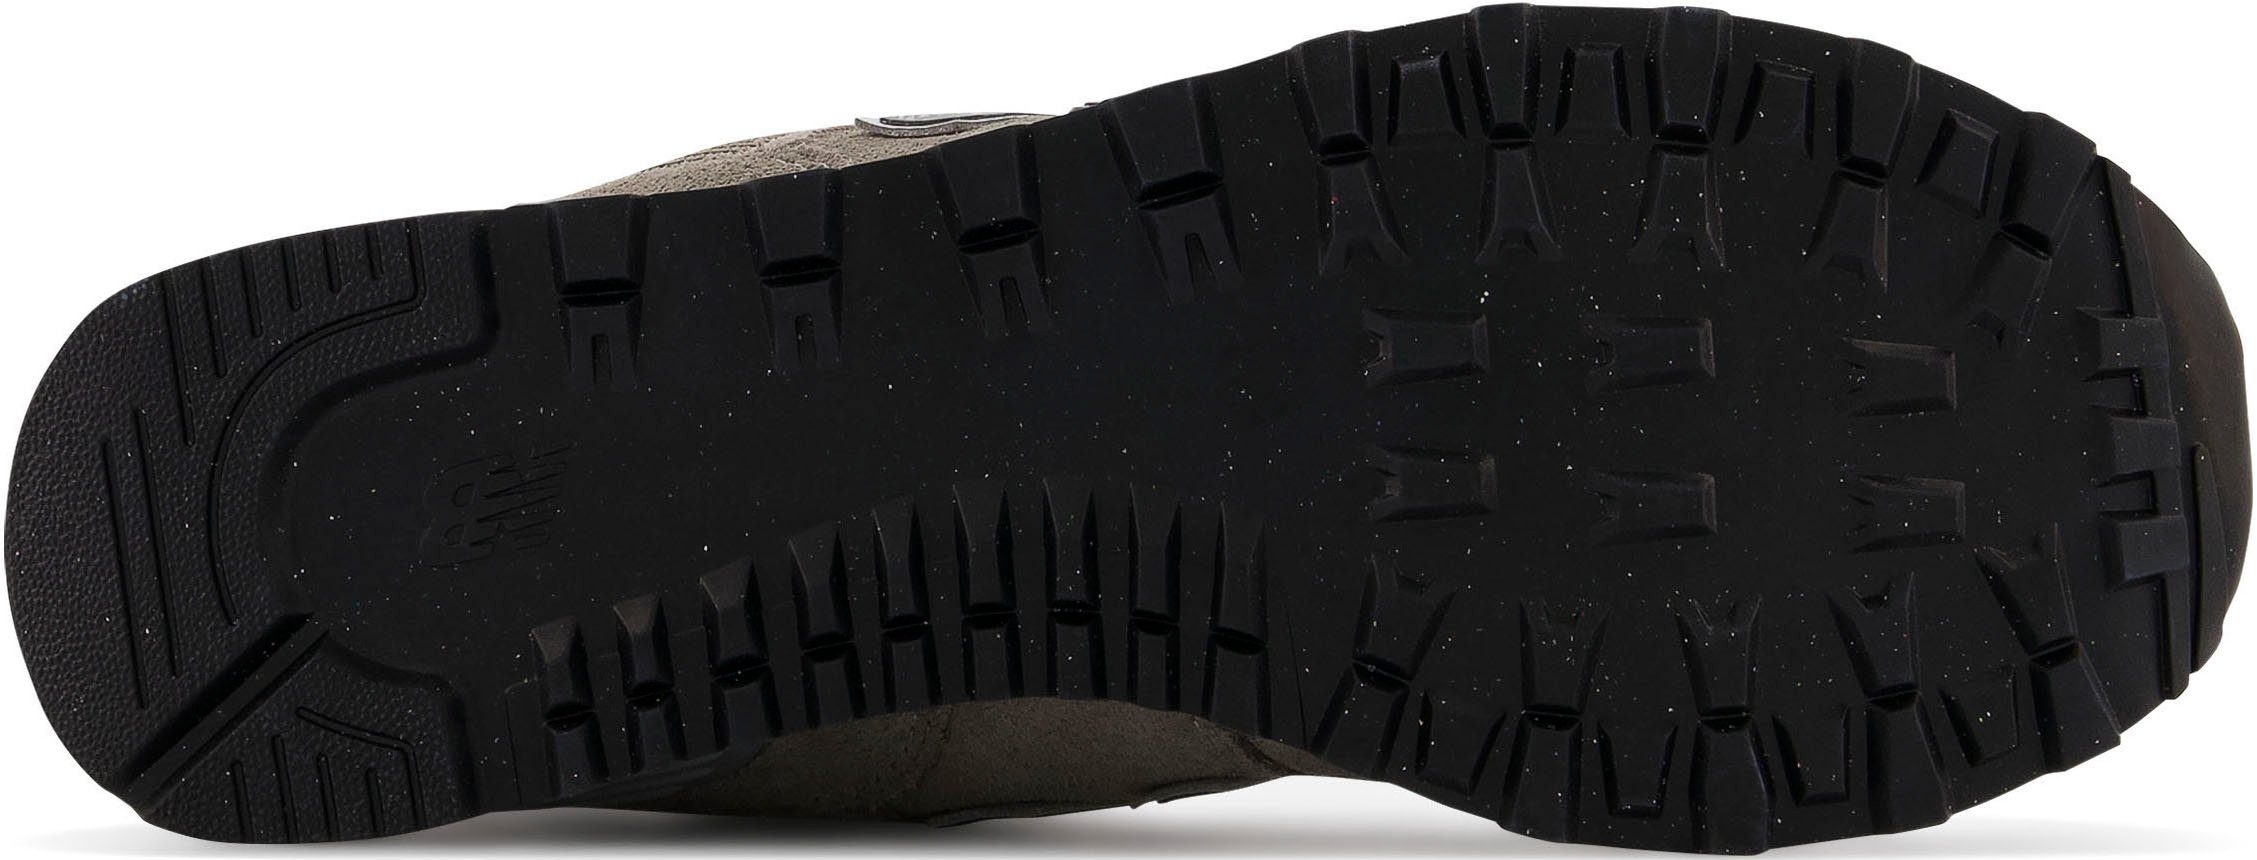 WL574 New Balance dunkelgrau-grau-weiß Core Sneaker